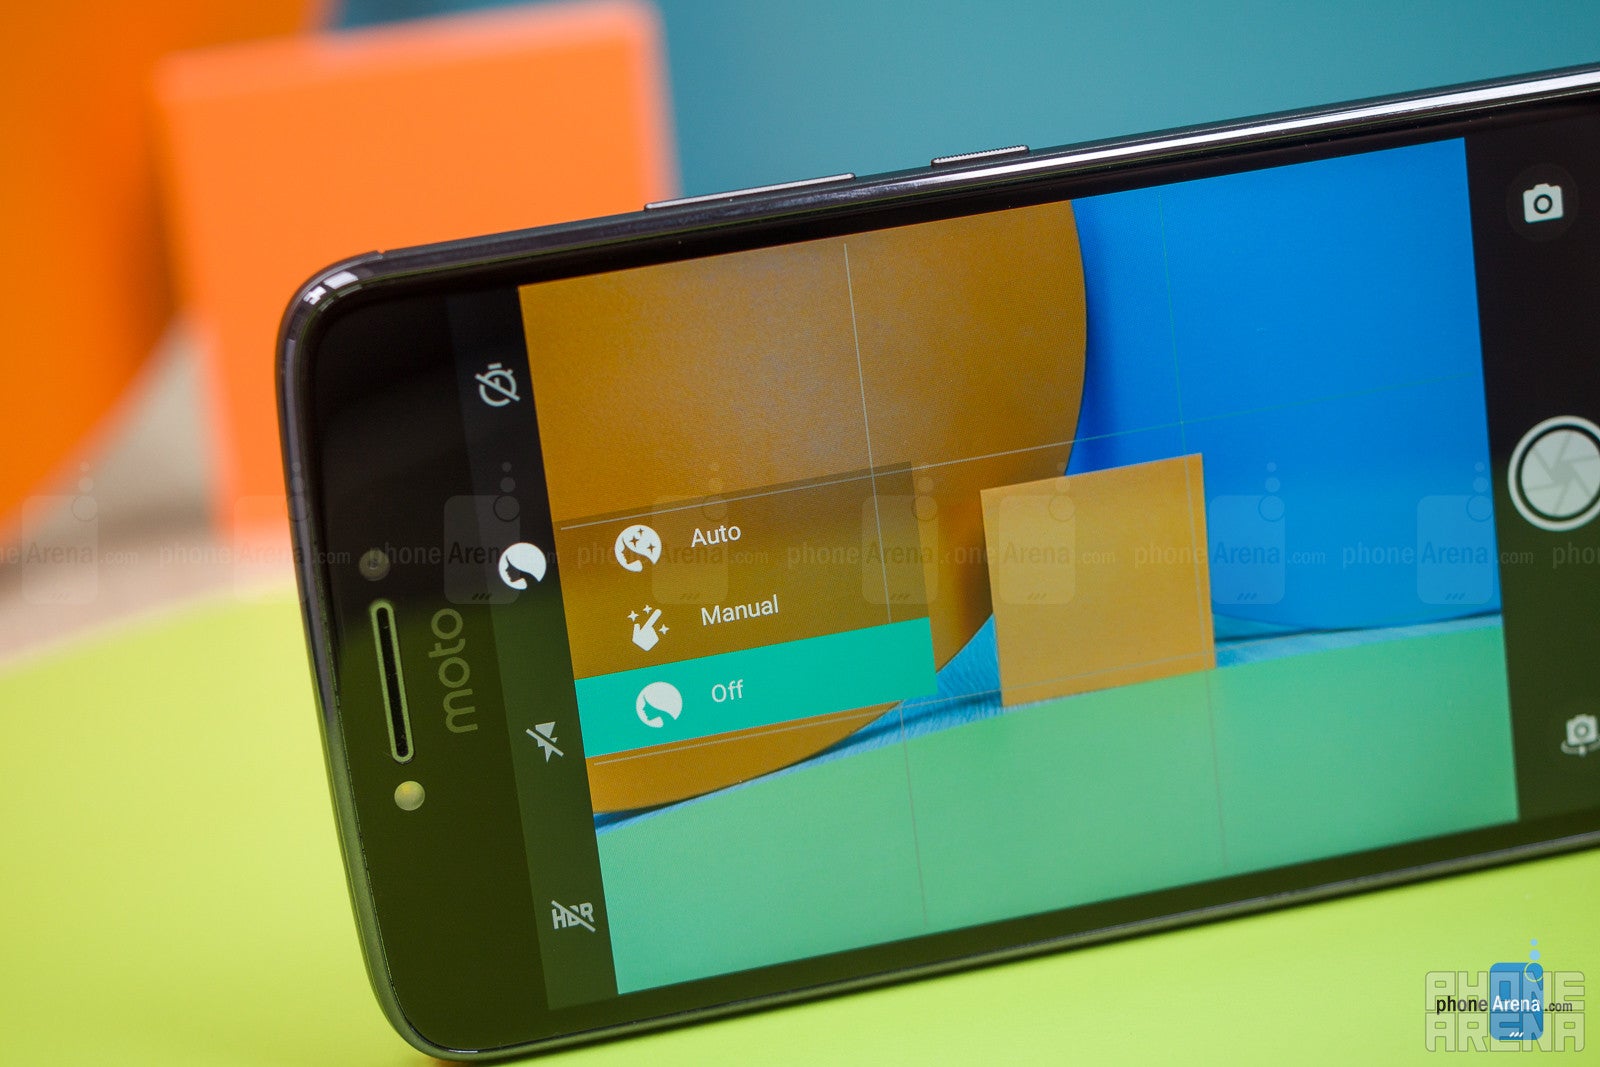 Motorola Moto E4 Plus Review